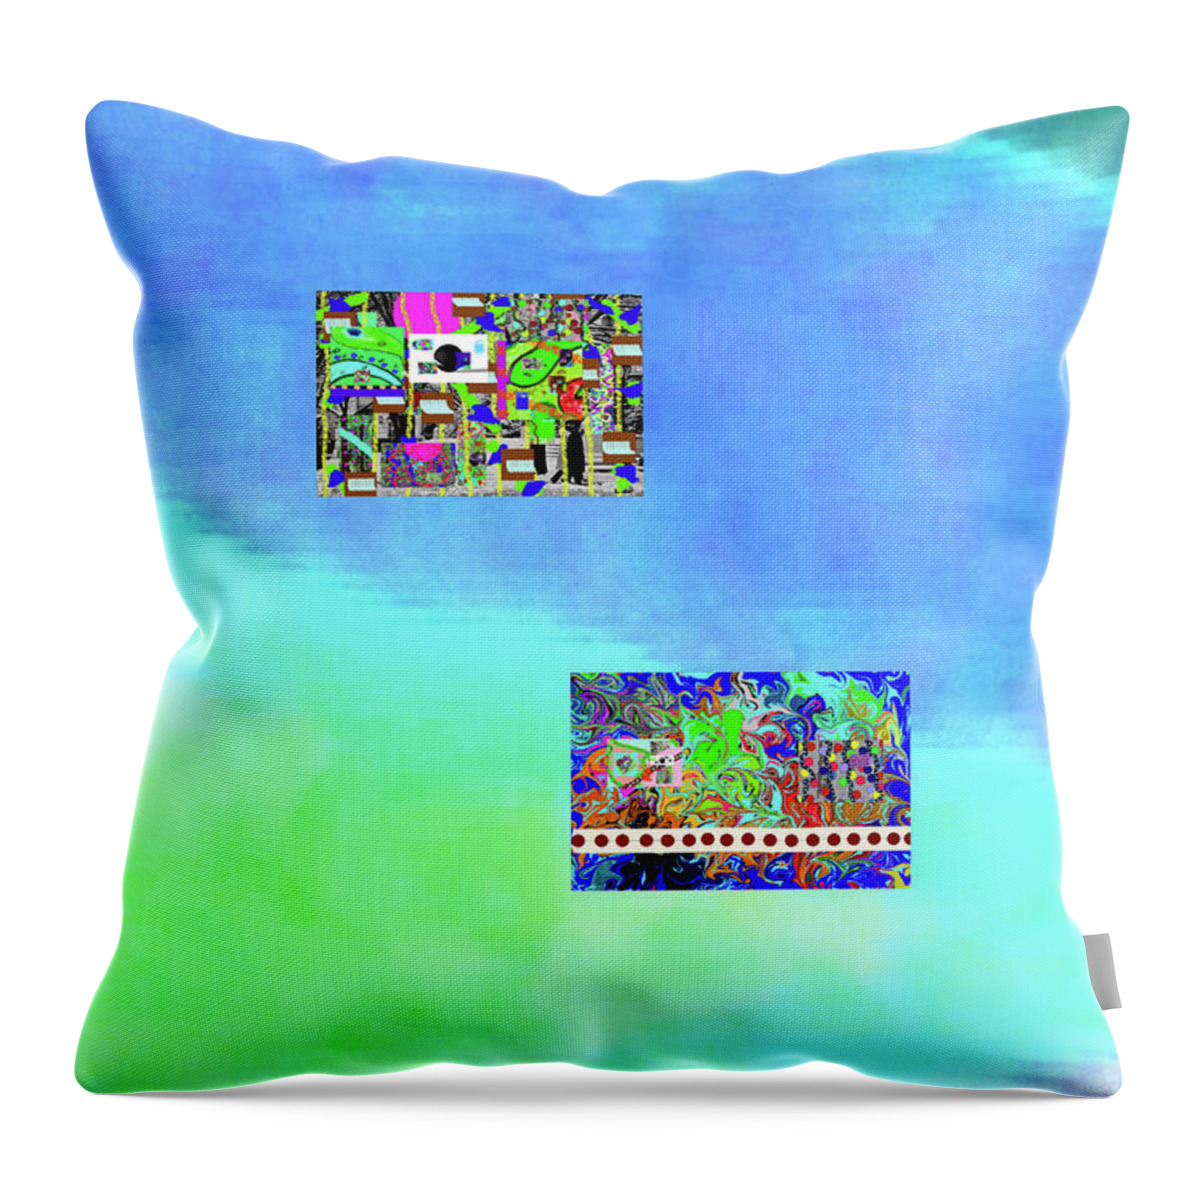 Walter Paul Bebirian Throw Pillow featuring the digital art 7-25-2015fabcdefghijklmno by Walter Paul Bebirian